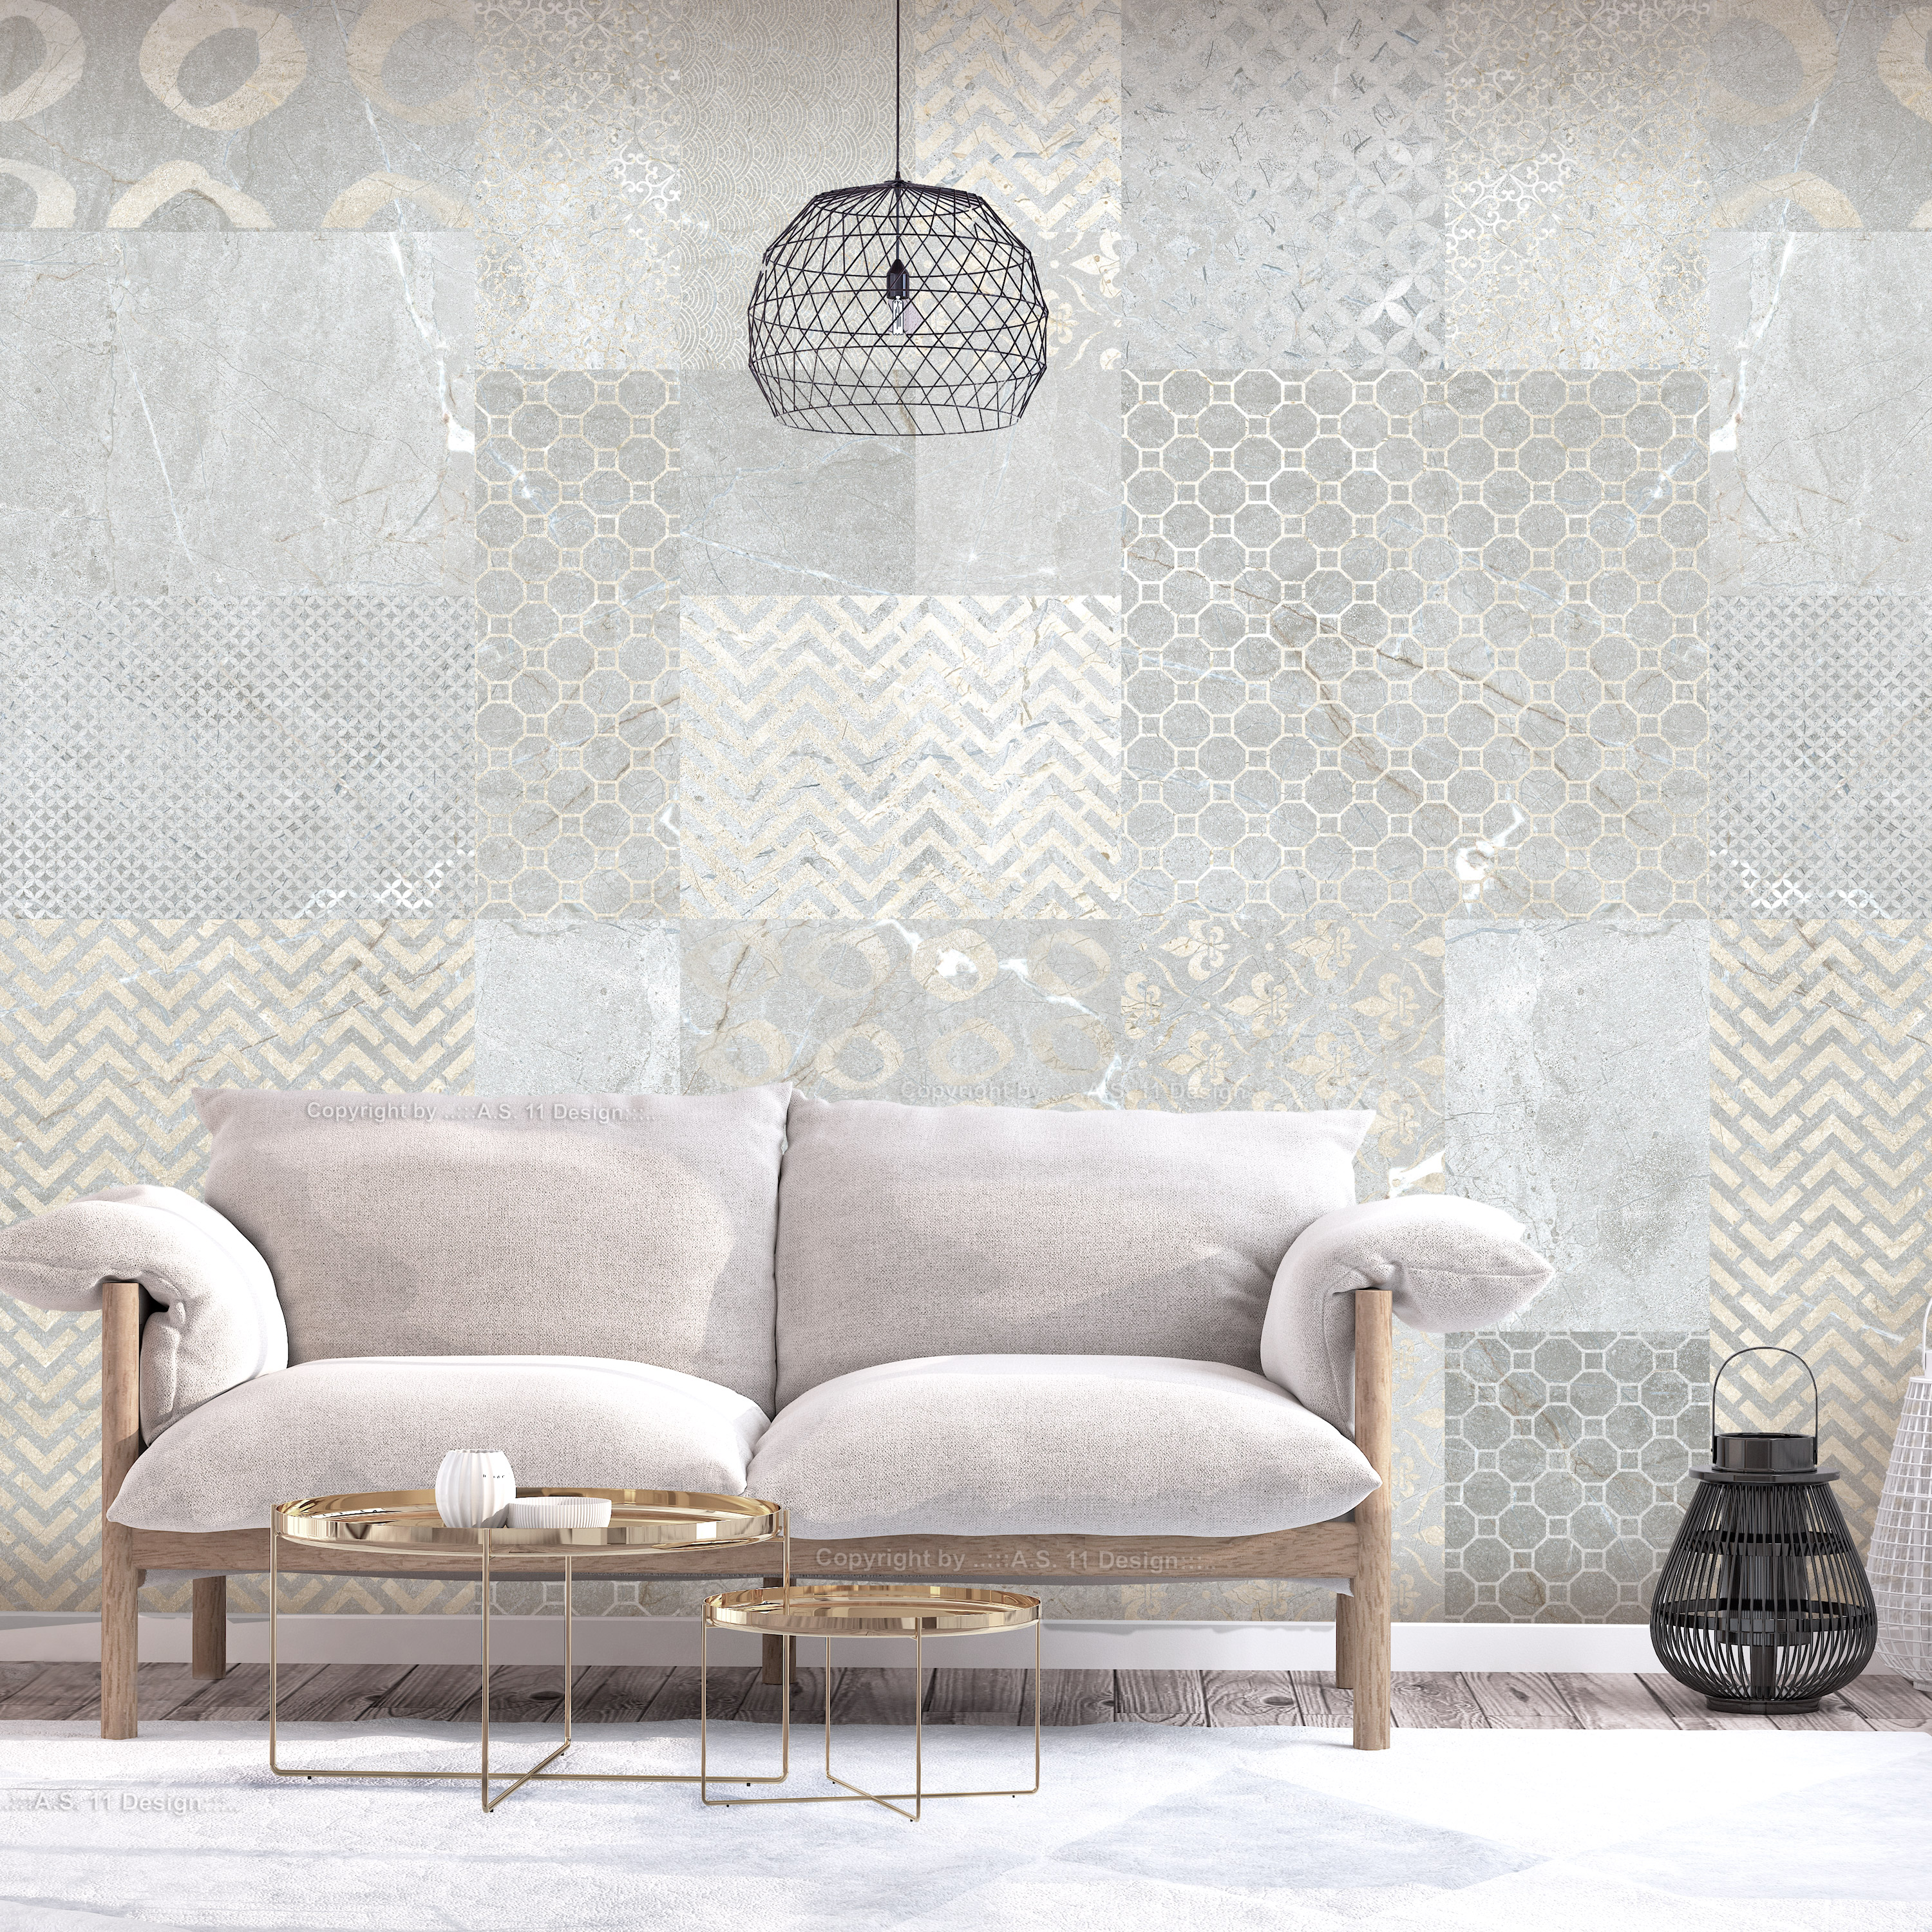 Self-adhesive Wallpaper - Tiles - 196x140